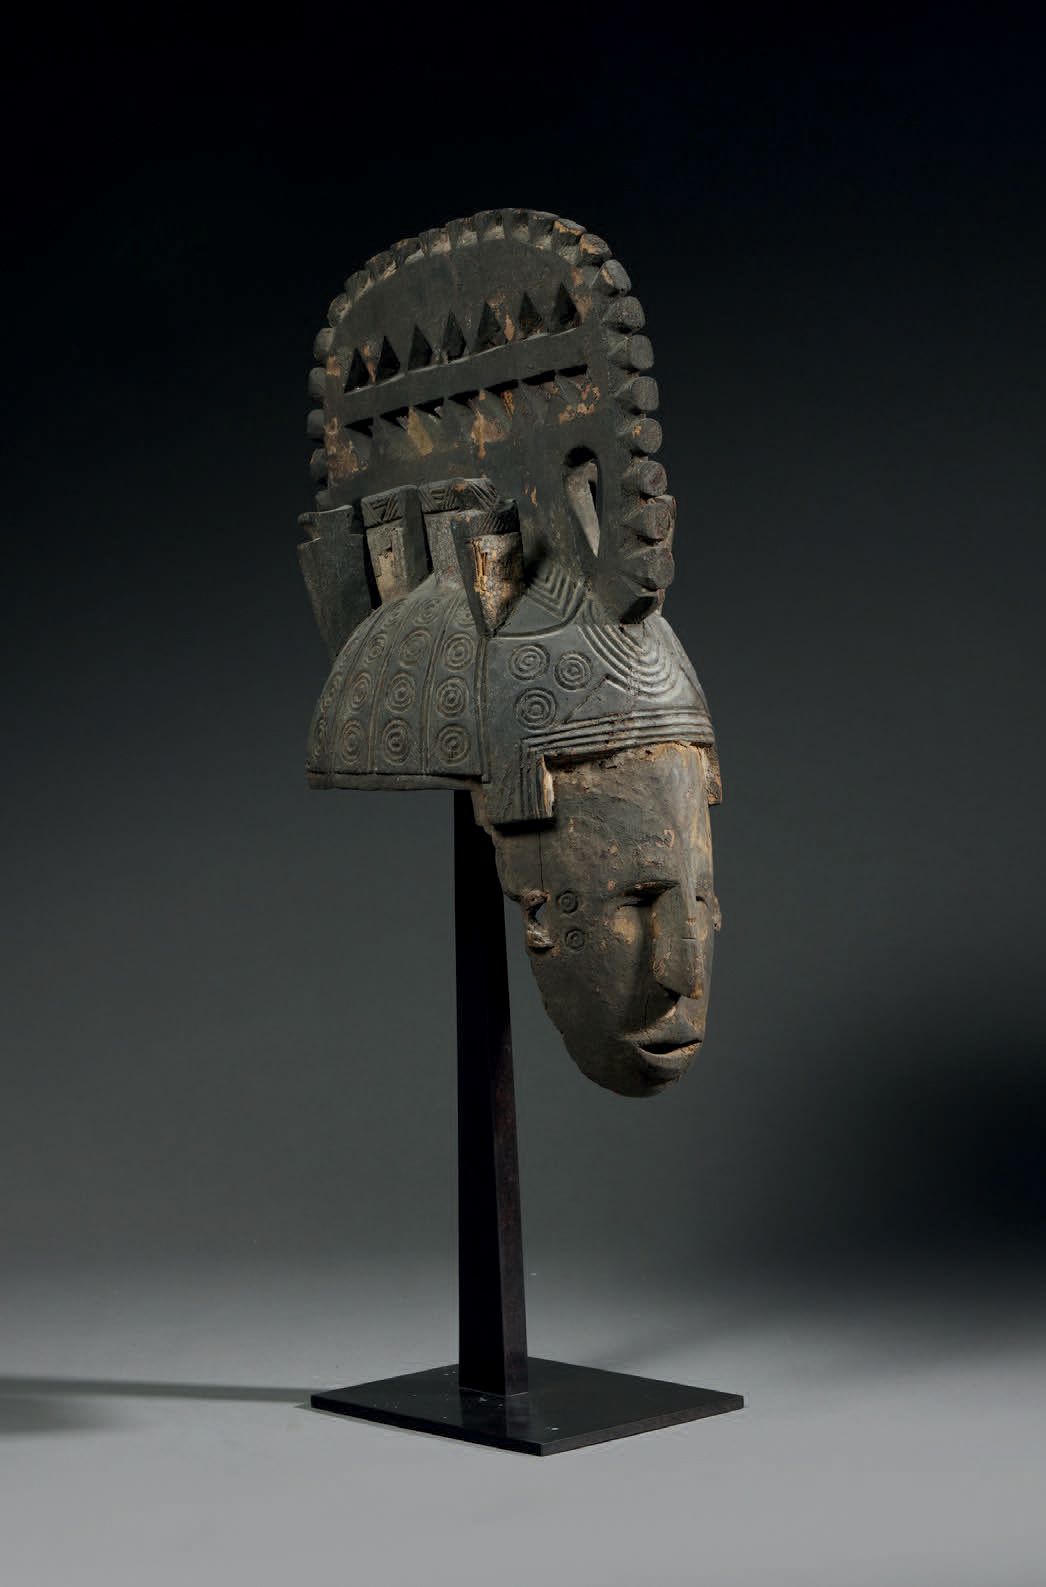 Null Masque Igbo Mmwo
Nigeria
Bois
H. 45 cm
Masque-heaume figurant un visage hum&hellip;